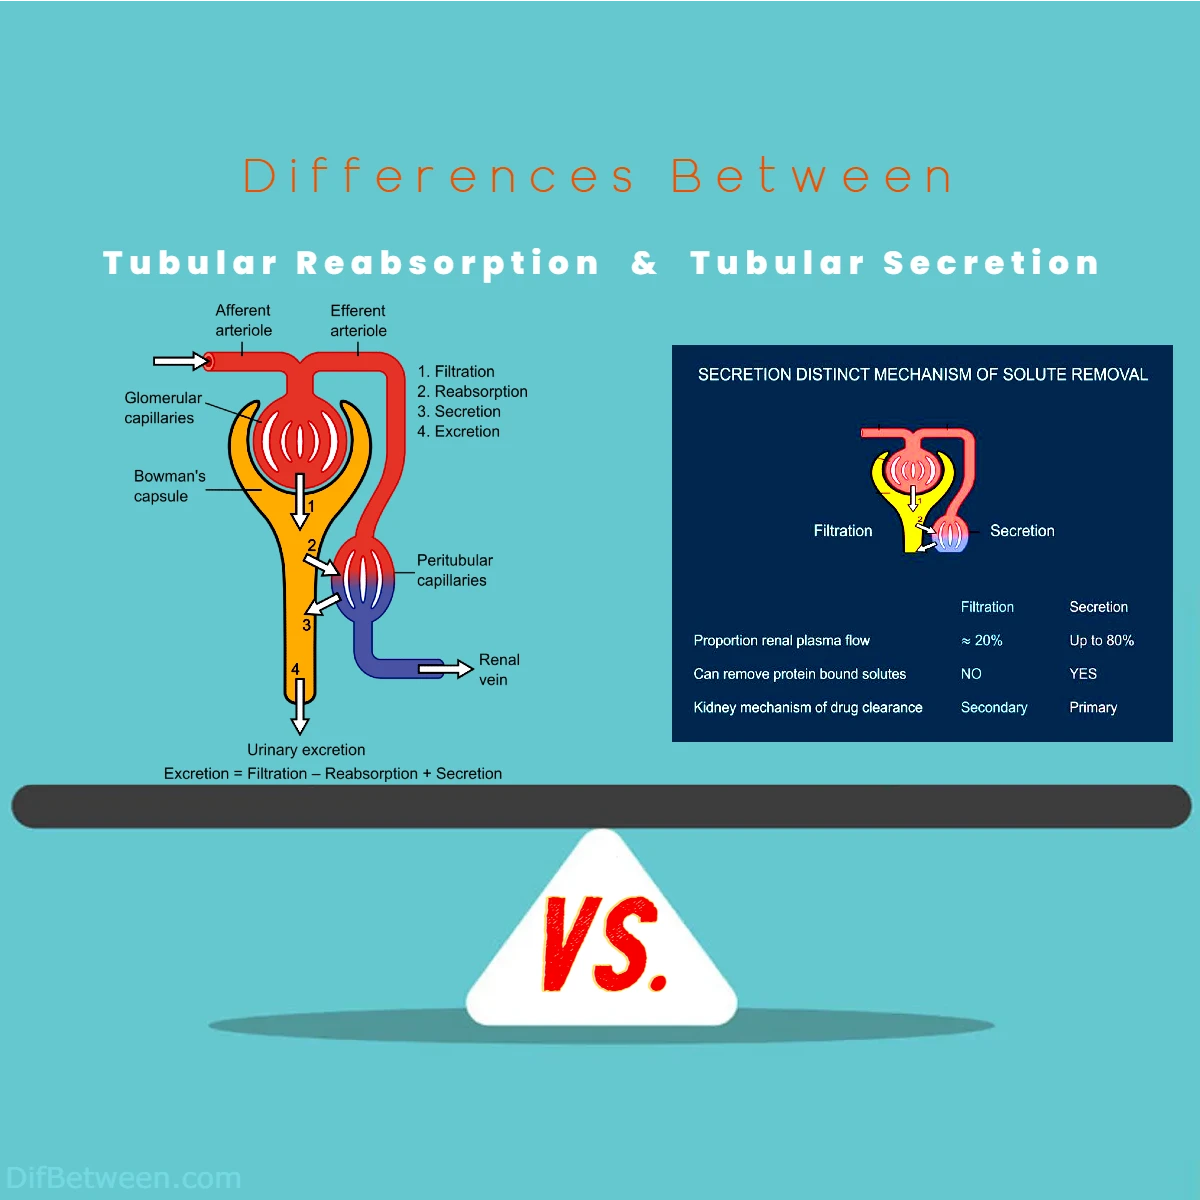 Differences Between Tubular Reabsorption vs Tubular Secretion